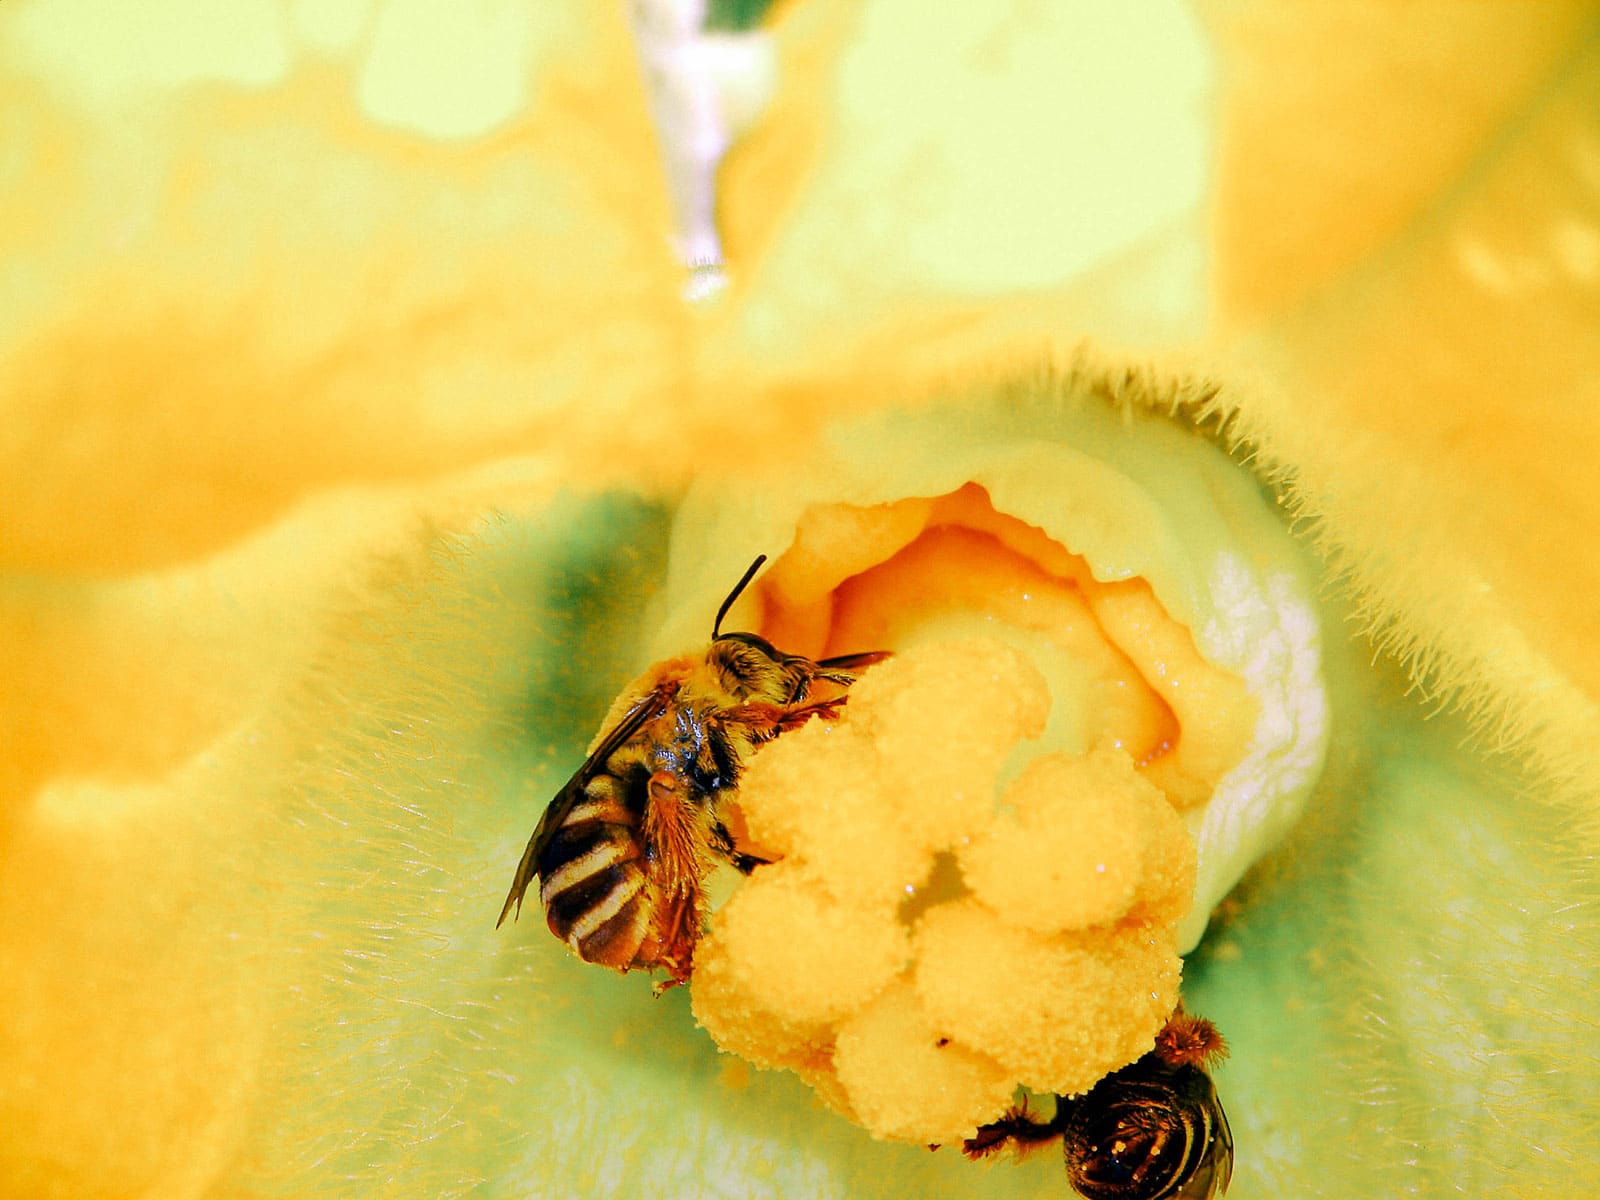 Squash bees (genera Peponapis and Xenoglossa) feeding on a squash flower